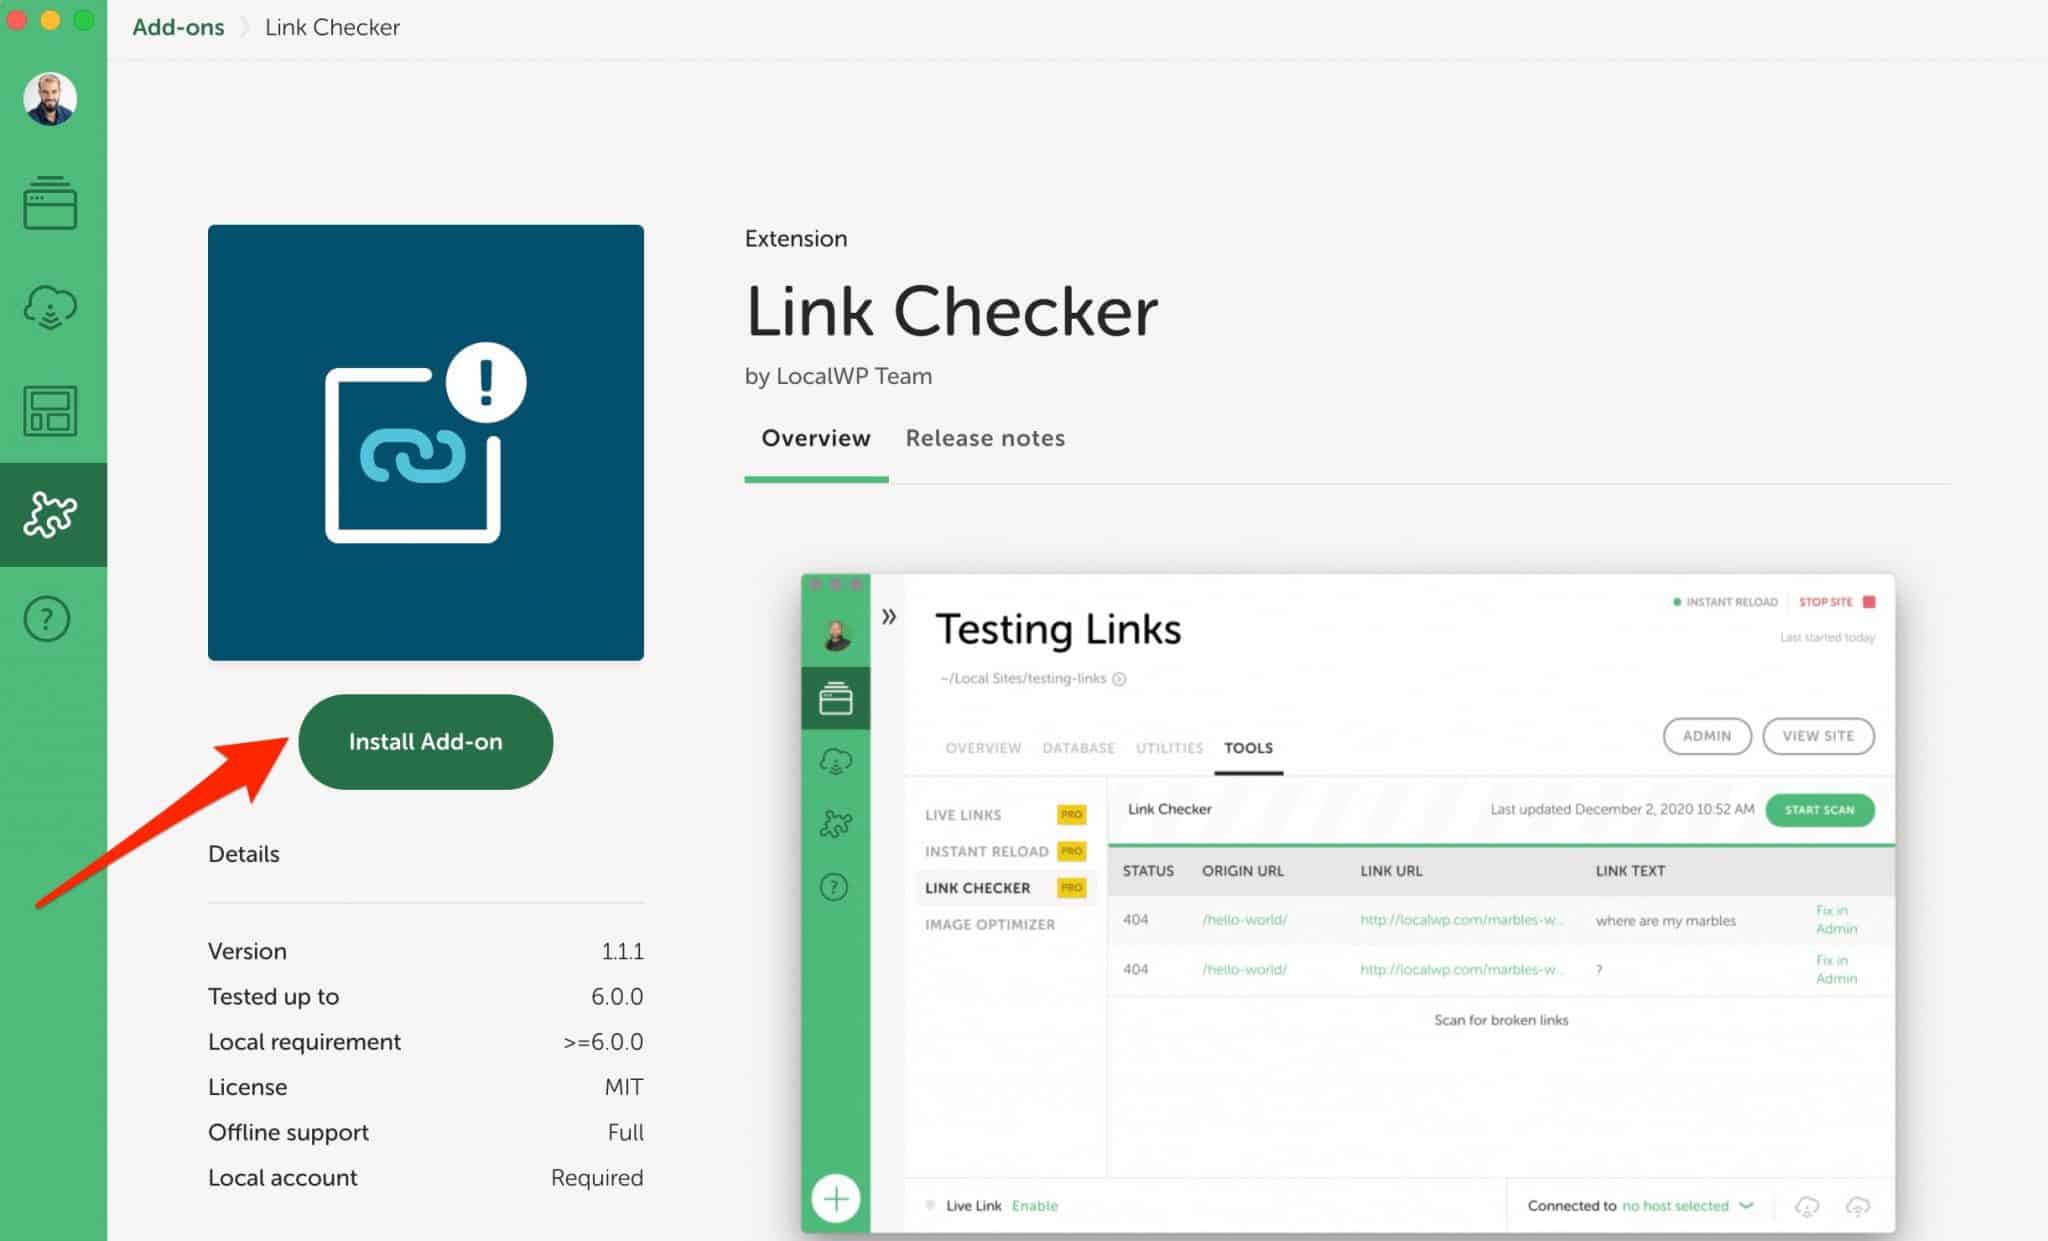 L'add-on Link Checker permet de tester des liens. 